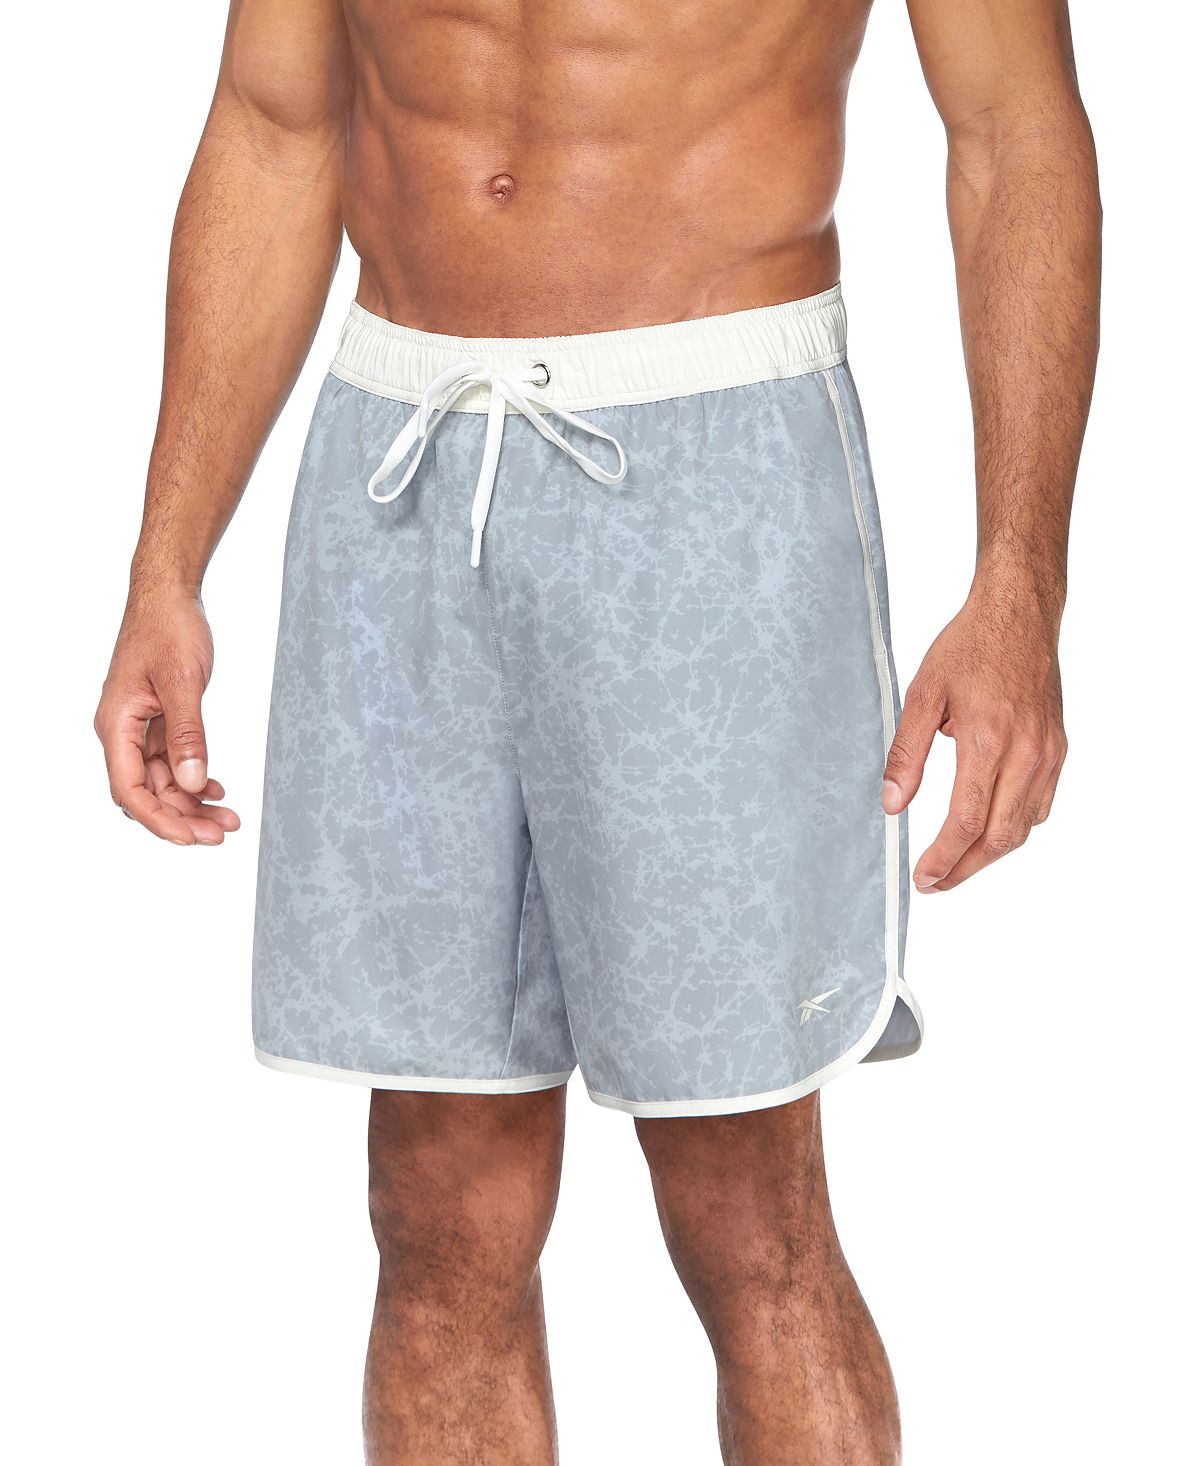 Мужские шорты для плавания Core Volley 7 дюймов Reebok